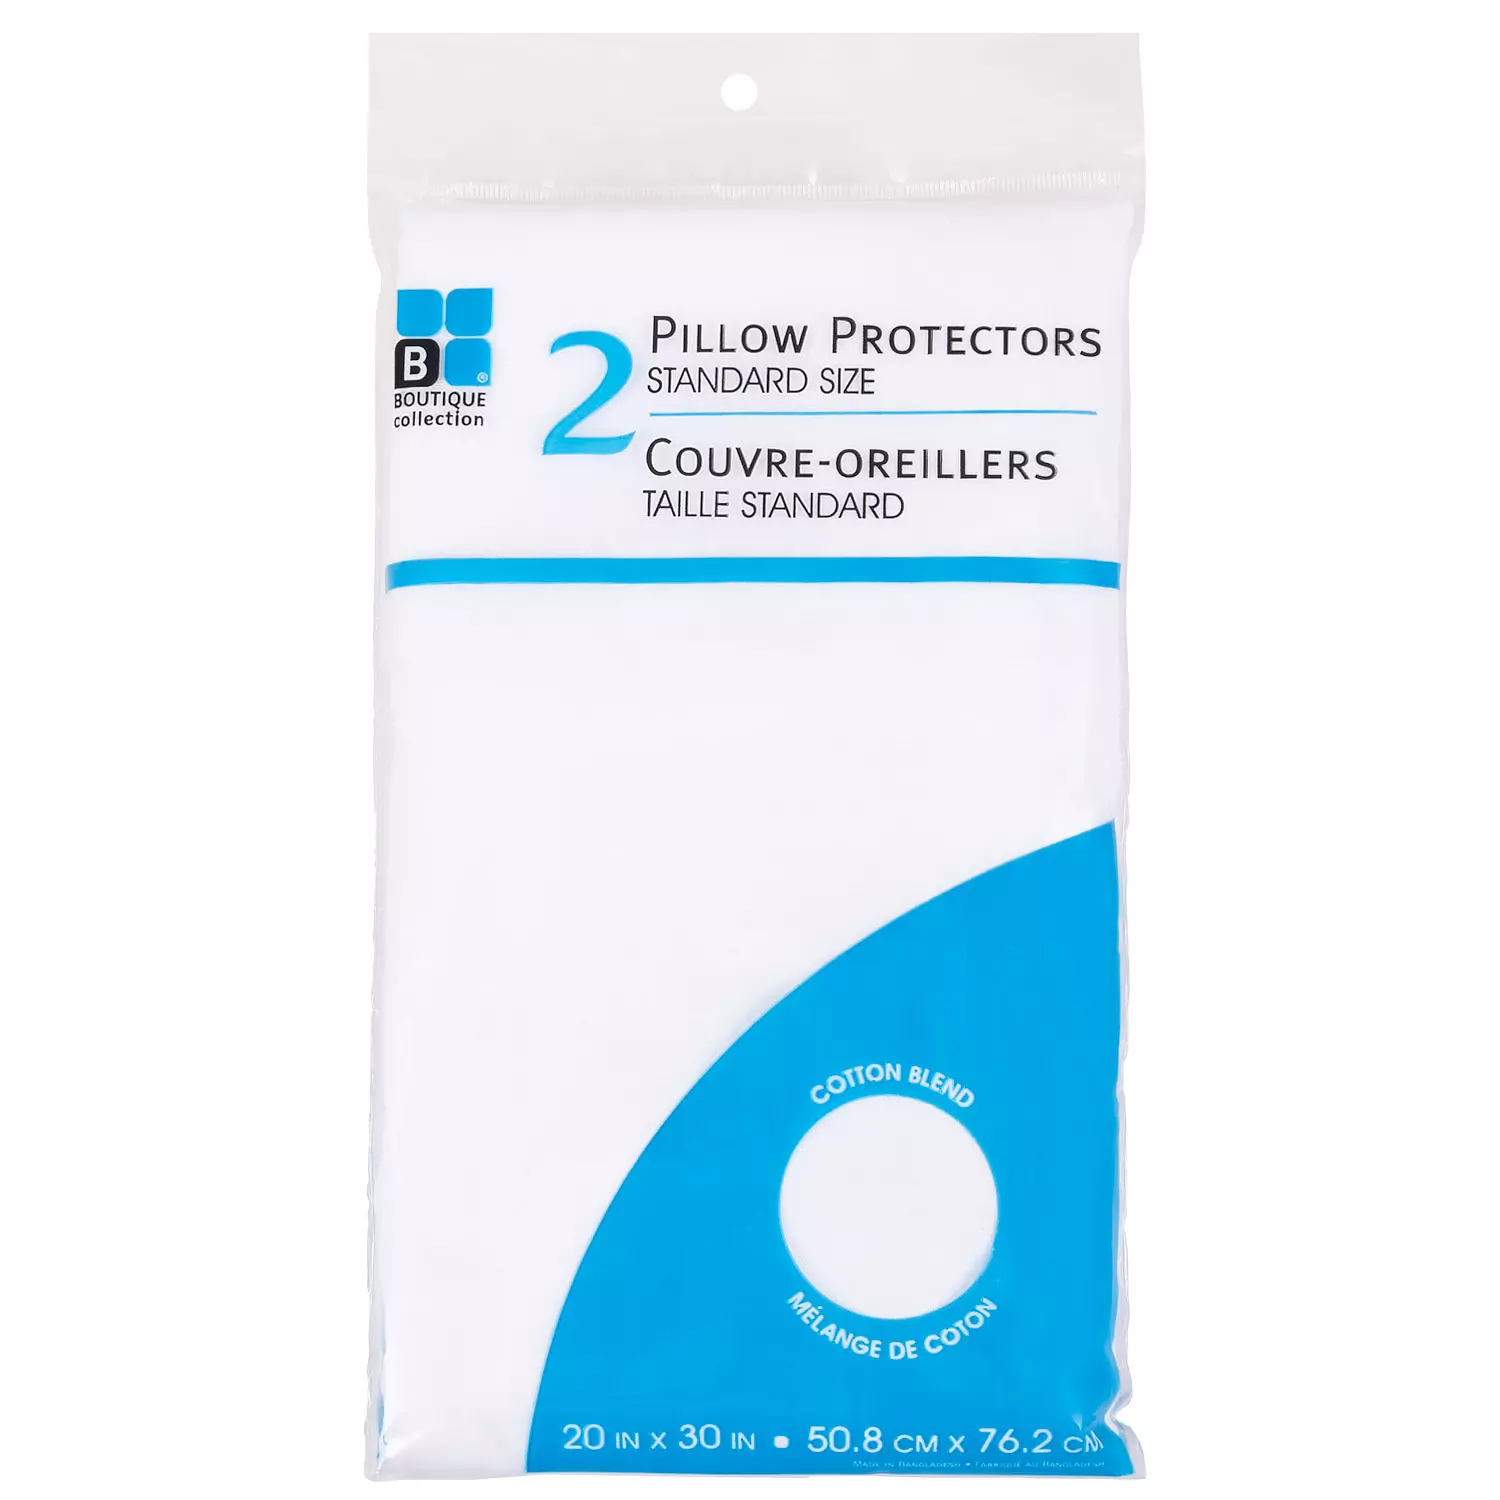 Pillow protectors, set of 2, standard size